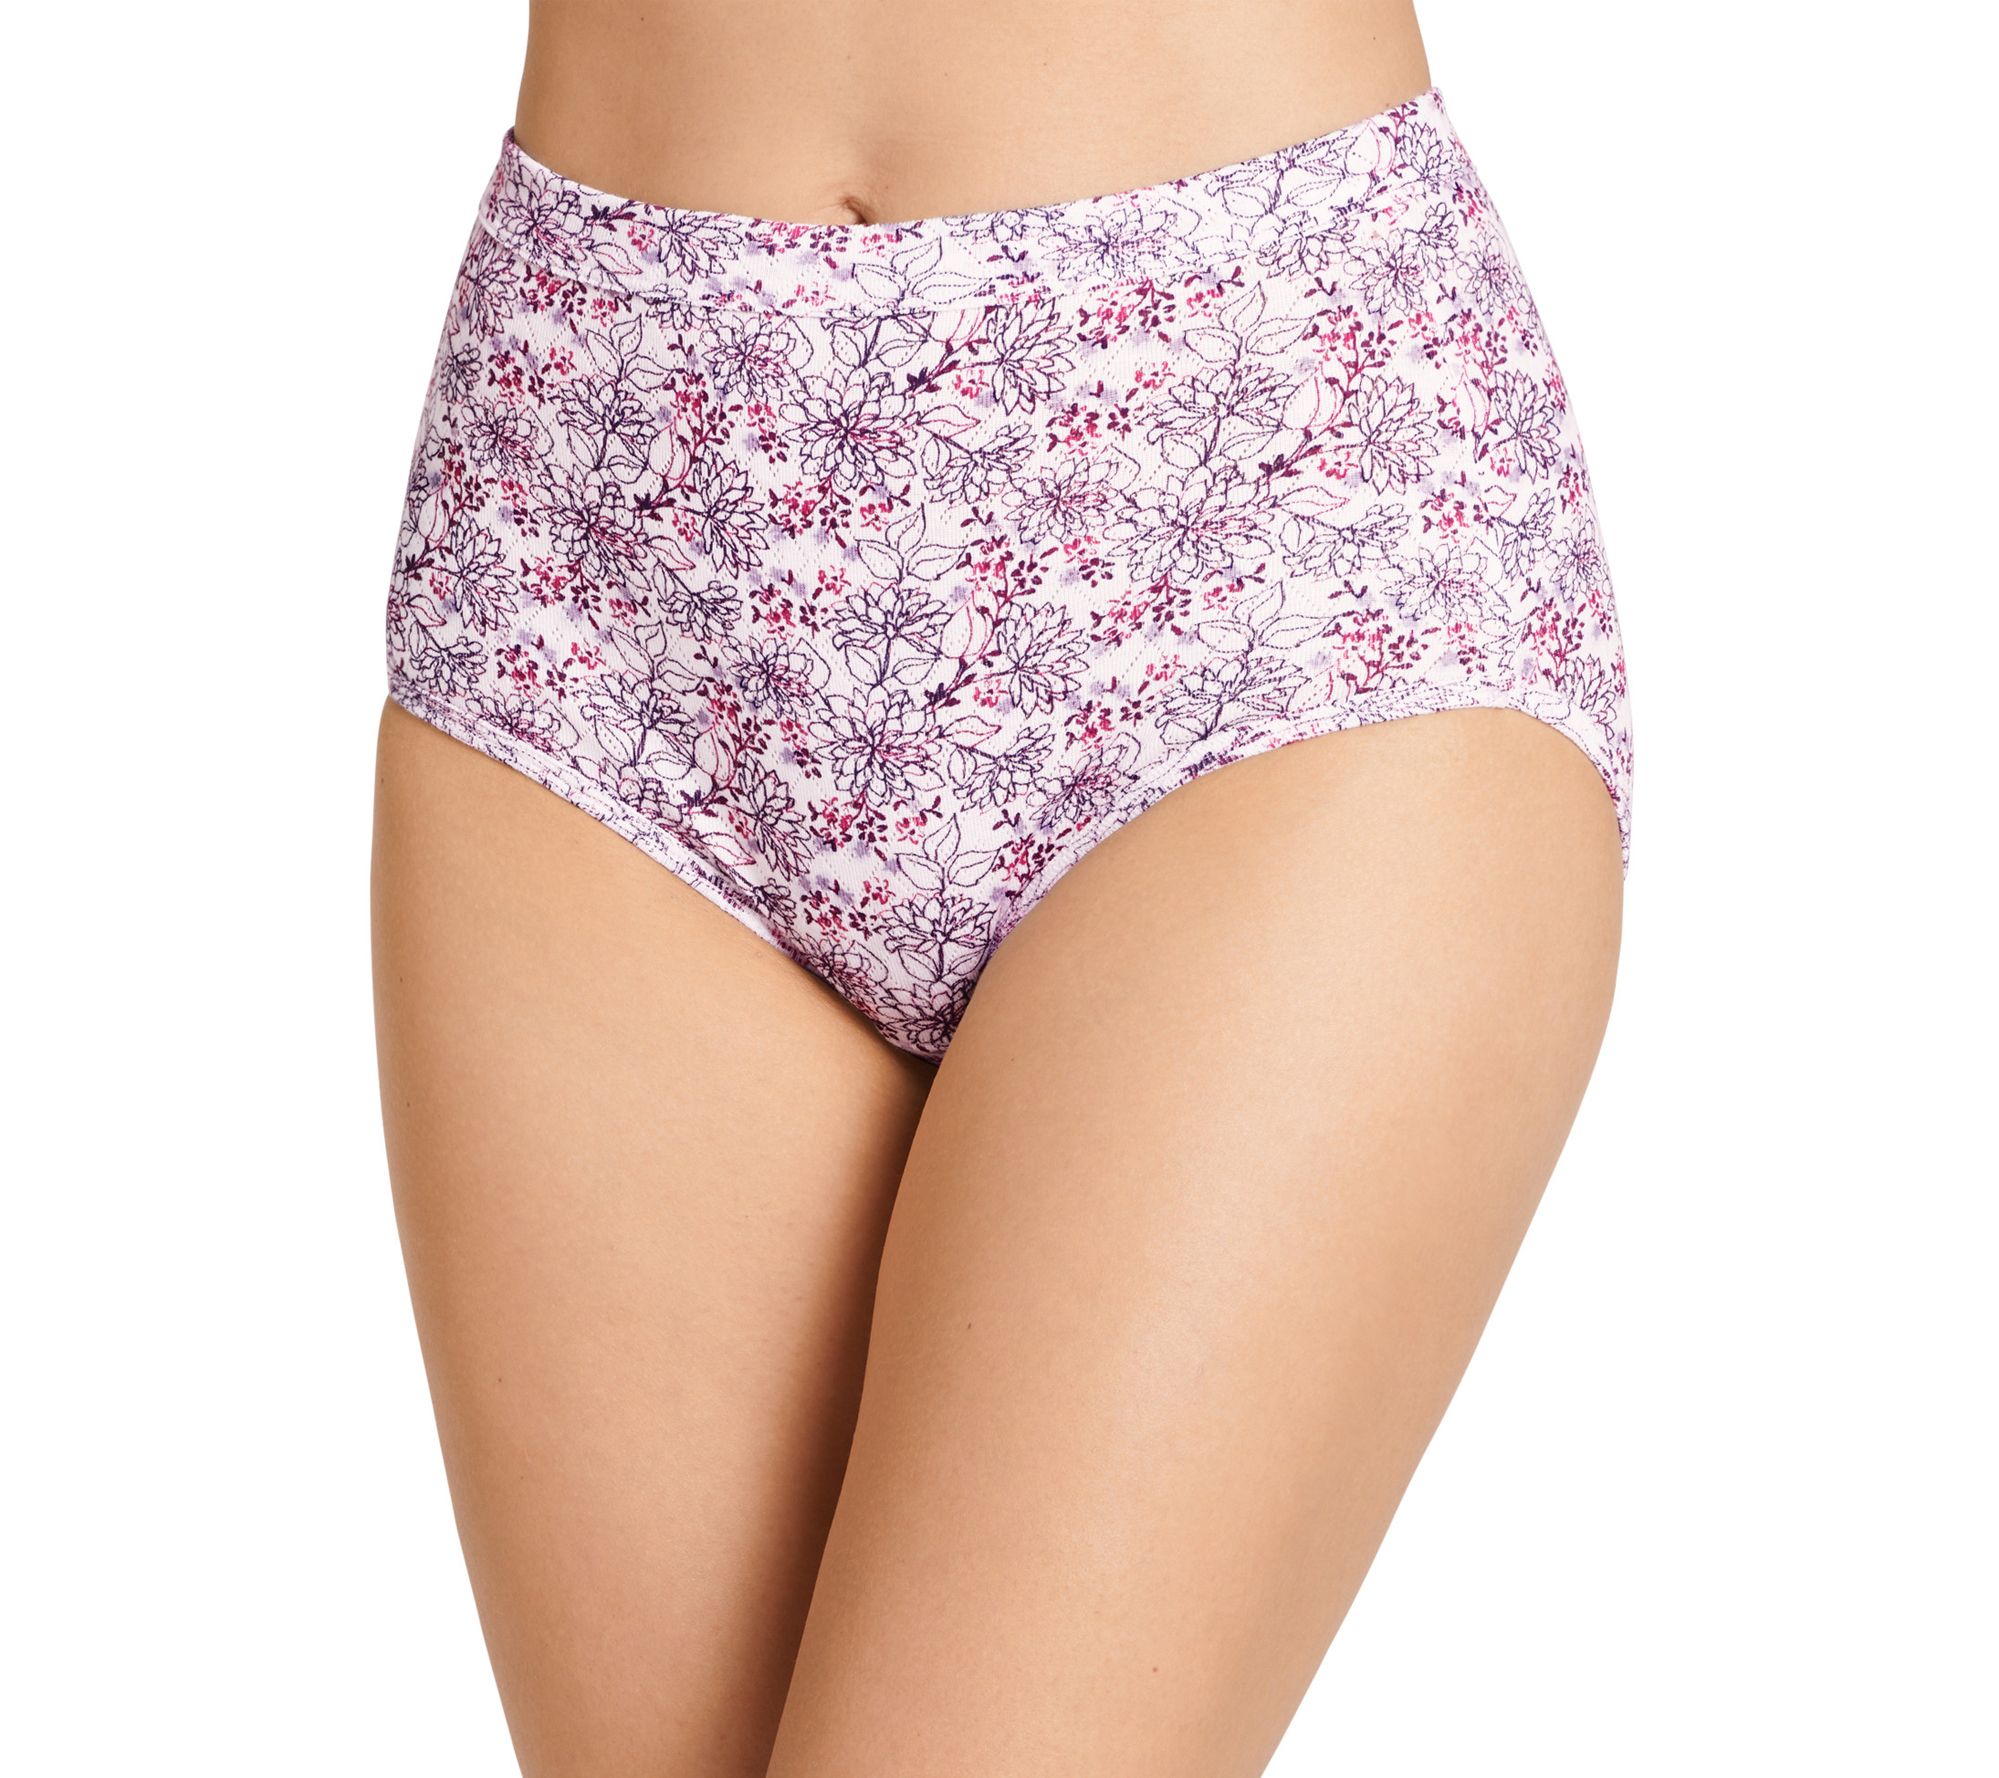 Buy JockeyWomen's Underwear Elance French Cut - 6 Pack Online at